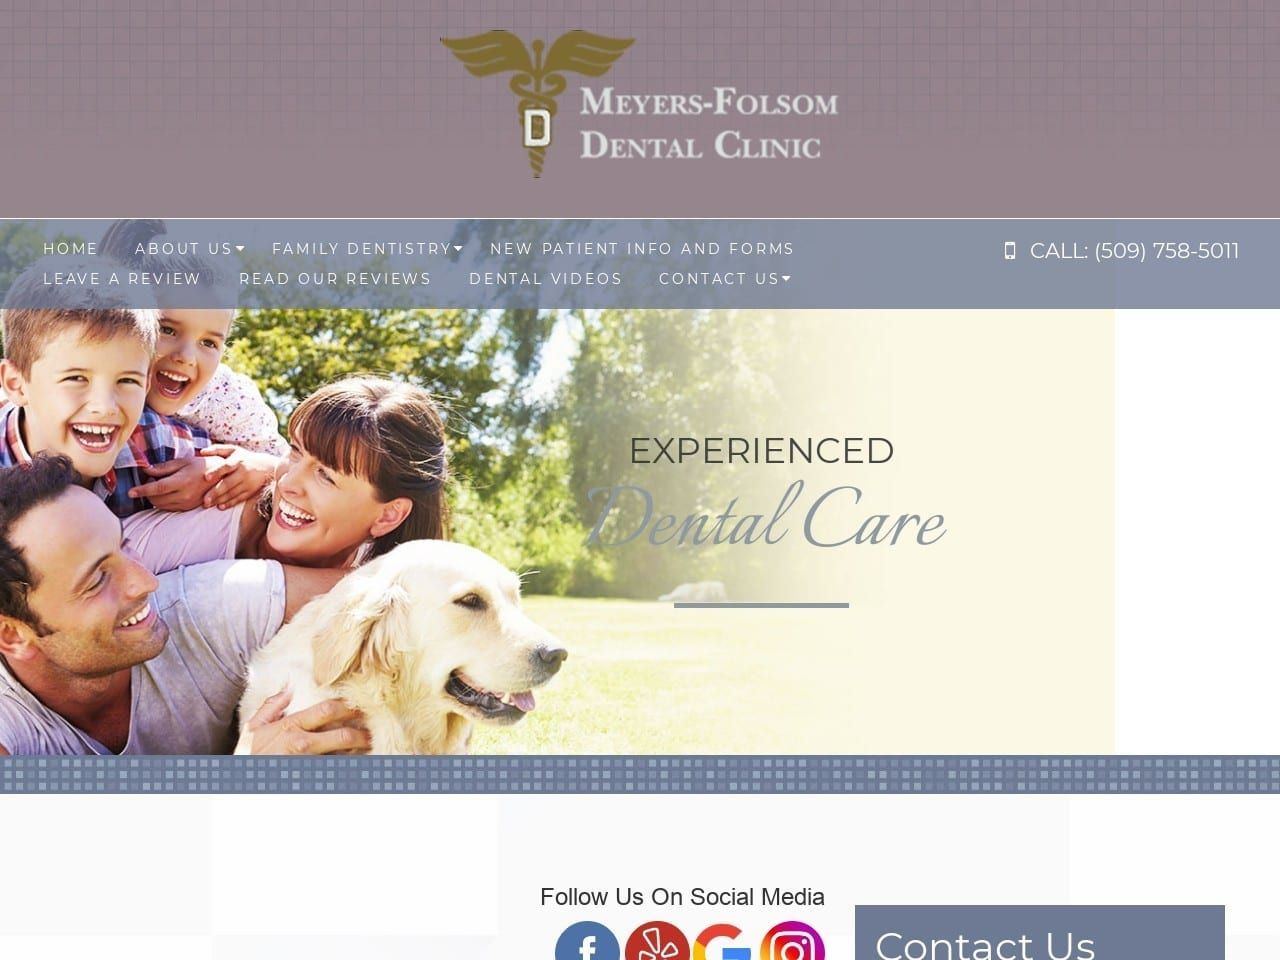 Meyers Folsom Dental Clinic Website Screenshot from meyersfolsomdental.com